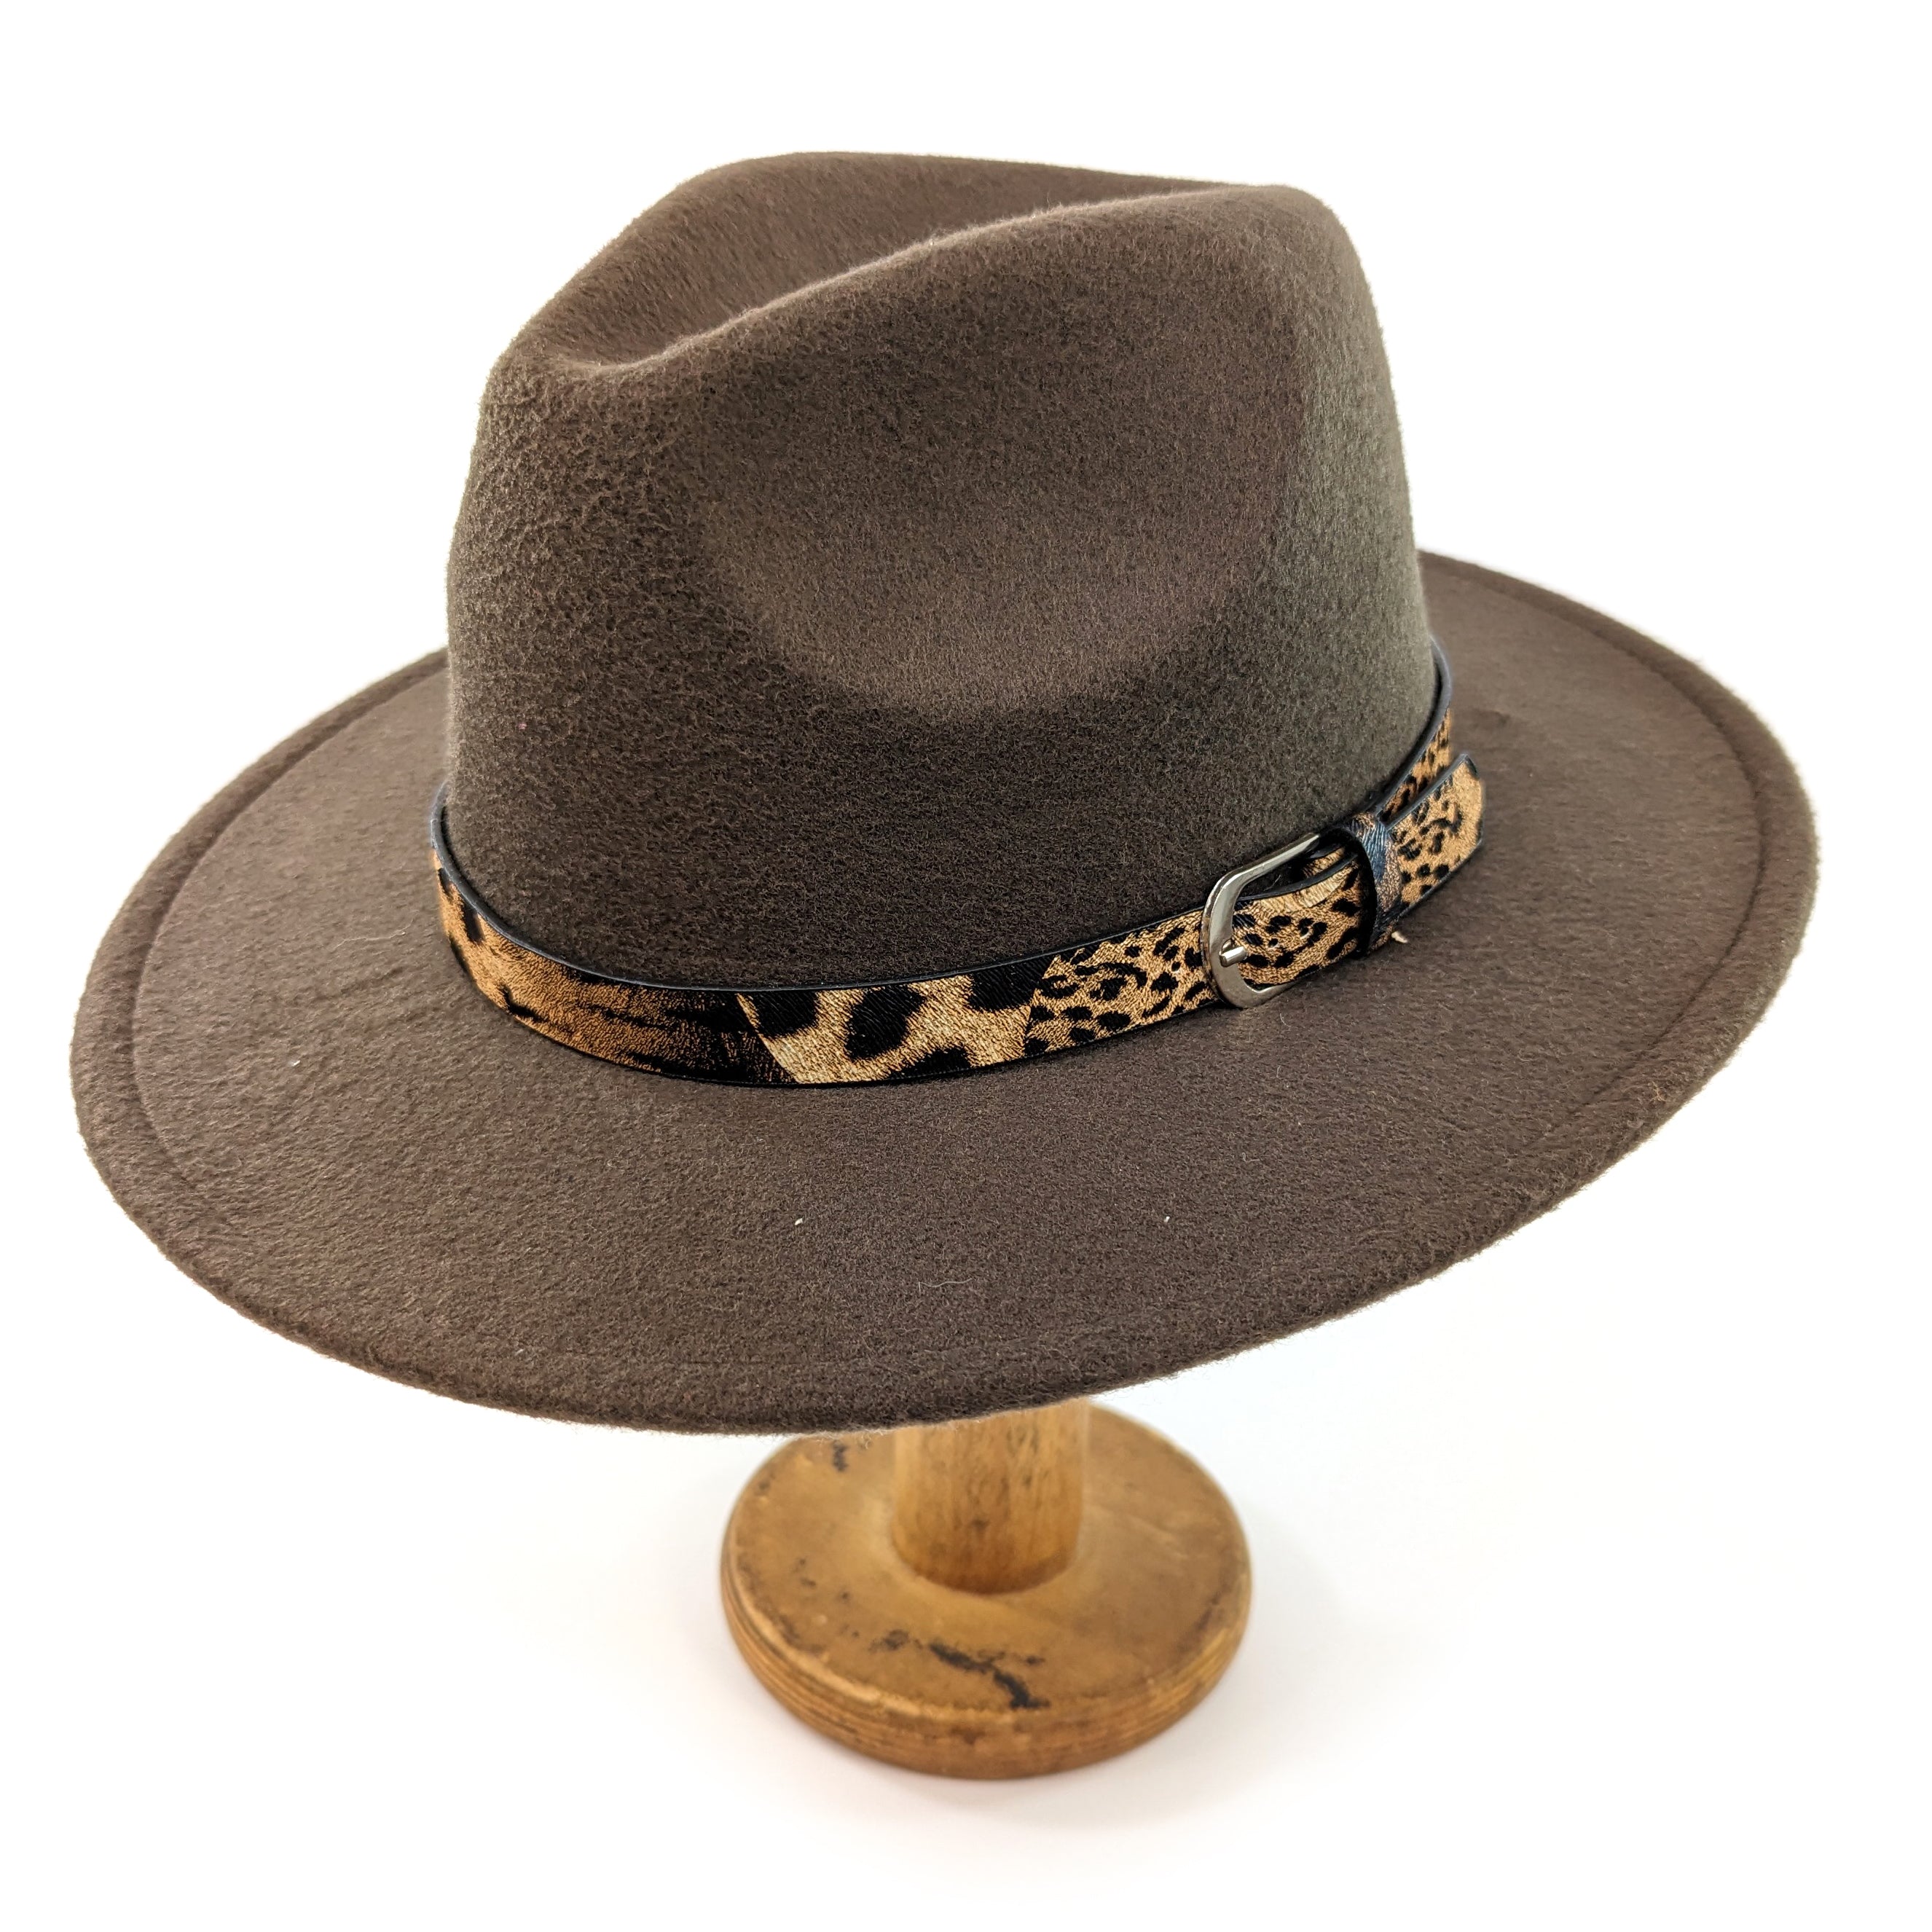 Animal Print Band Fedora Hat - Chocolate Brown